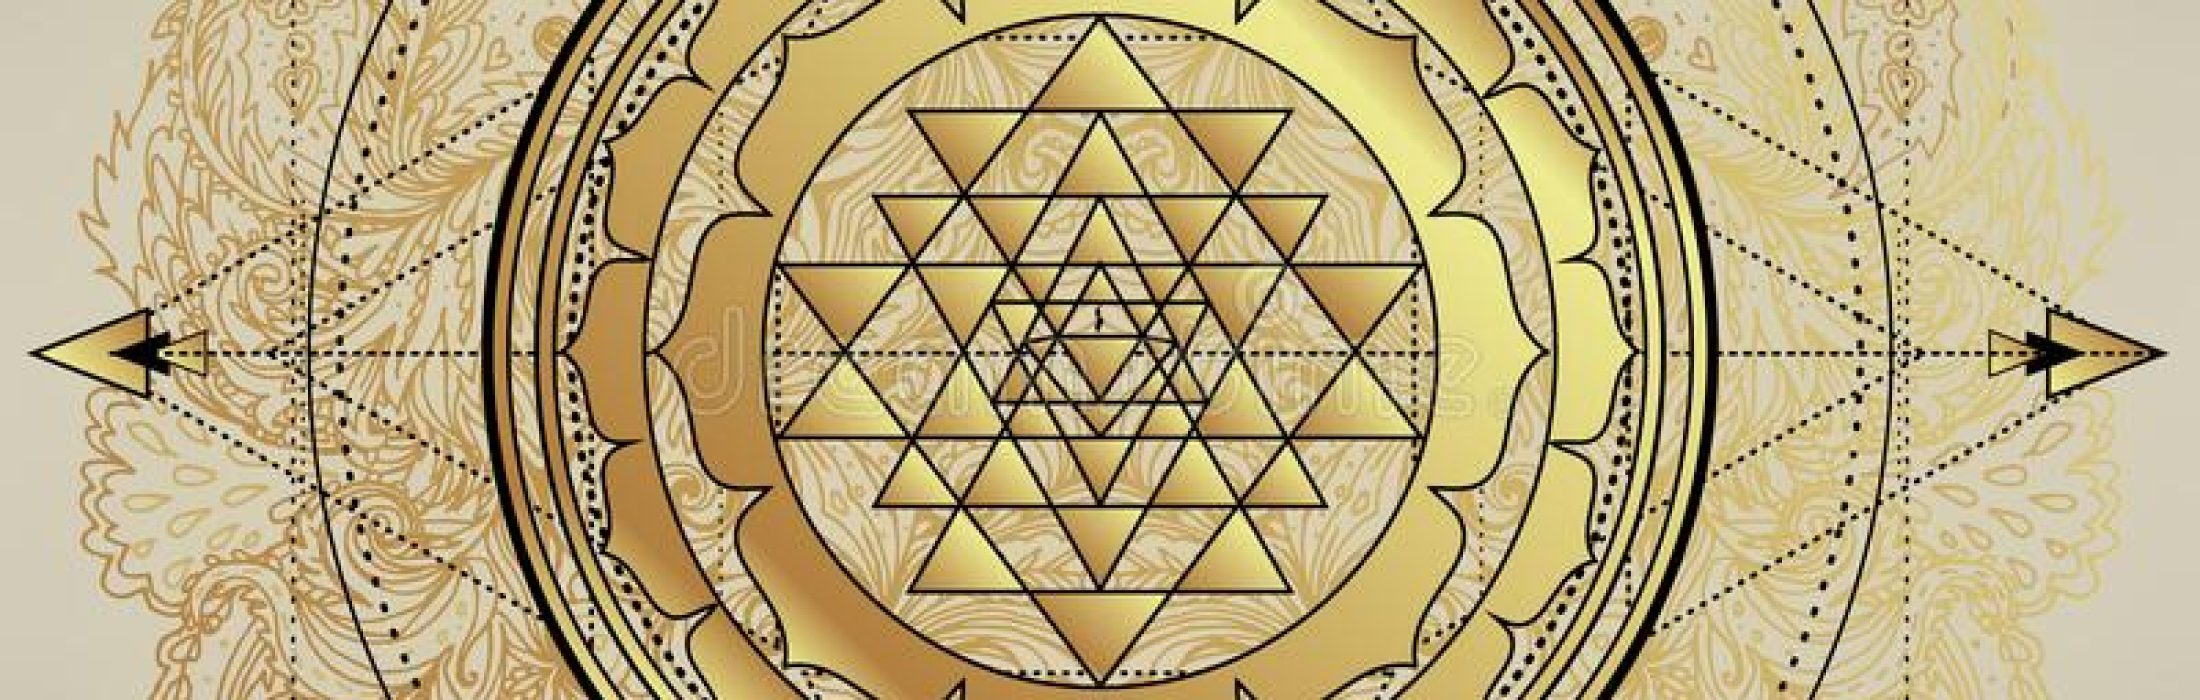 el-sri-yantra-o-chakra-forma-de-diagrama-mistico-escuela-shri-vidya-del-simbolo-tantra-hindu-vector-geometria-sagrada-elemento-200278801